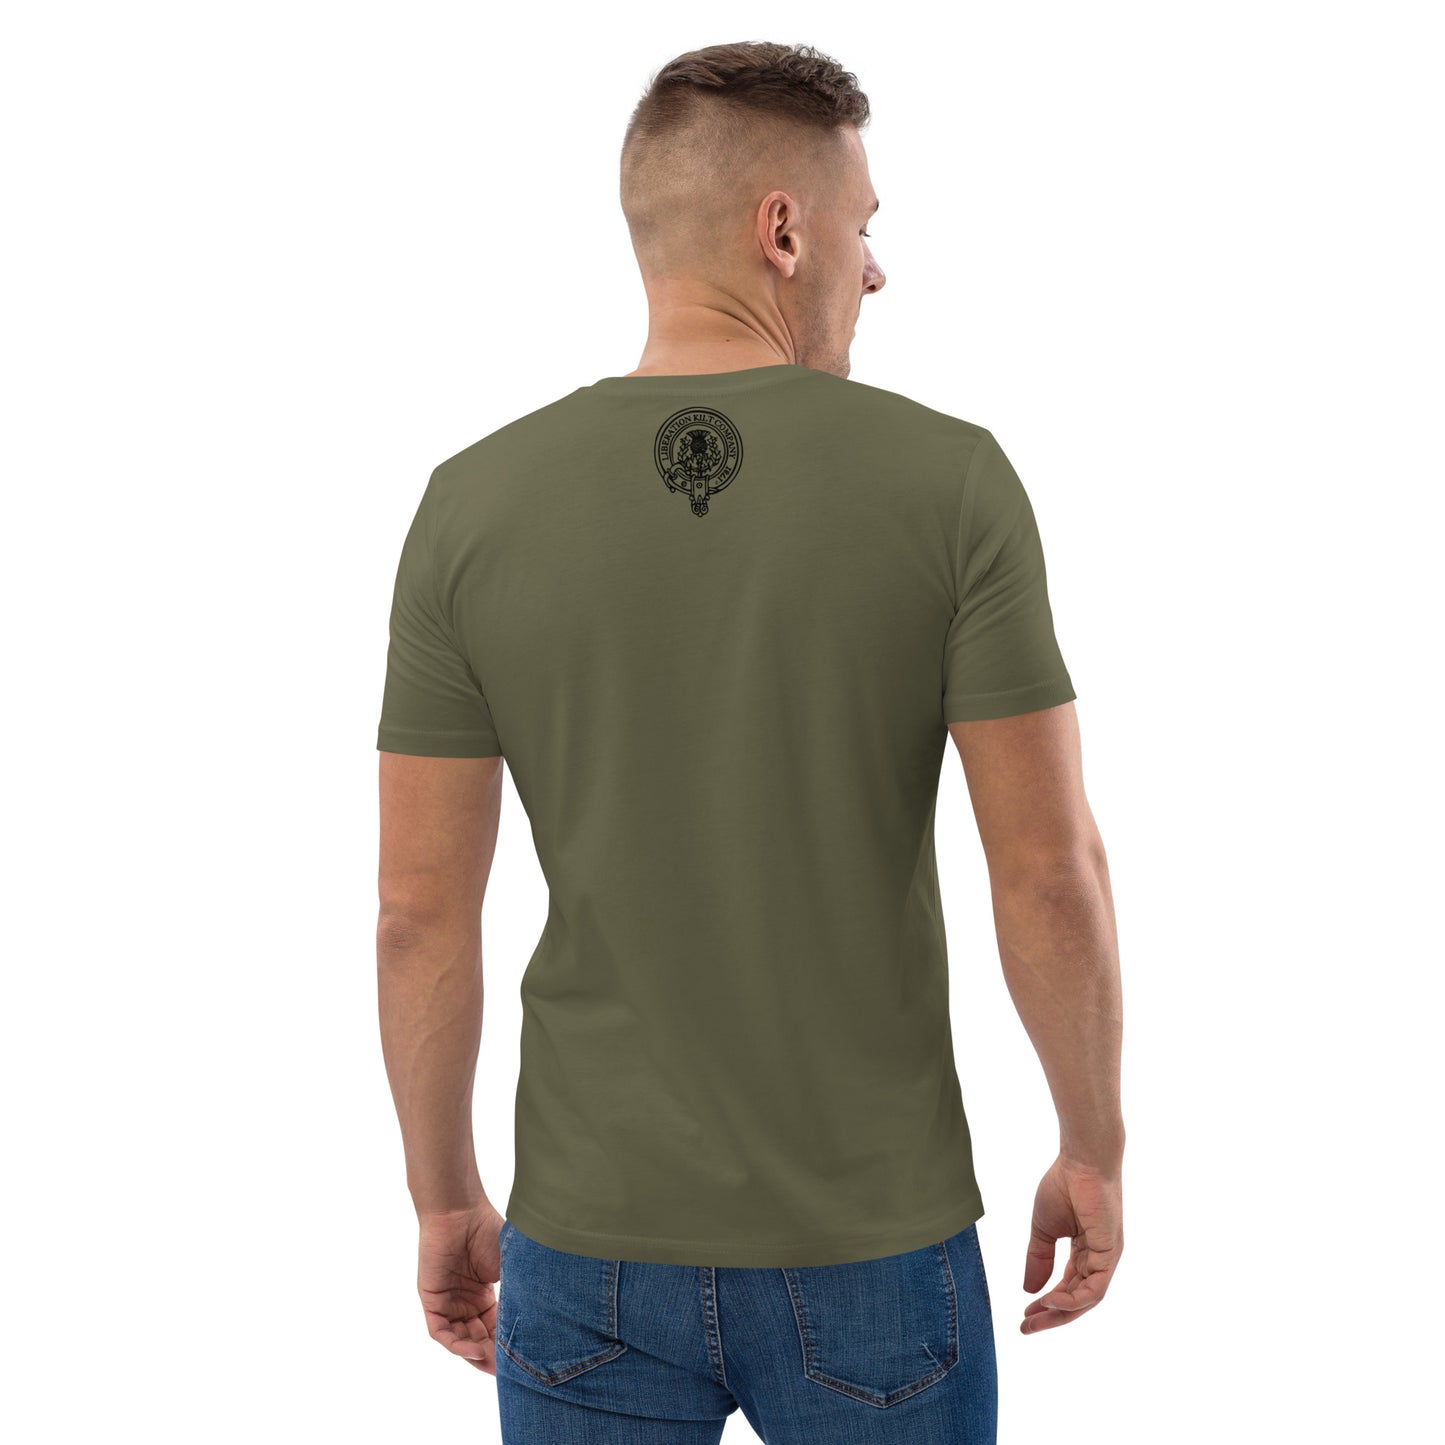 LiberationKilt: 'Skelton in the Wilderness' Organic White/Military Unisex T-Shirt with Black Illustration